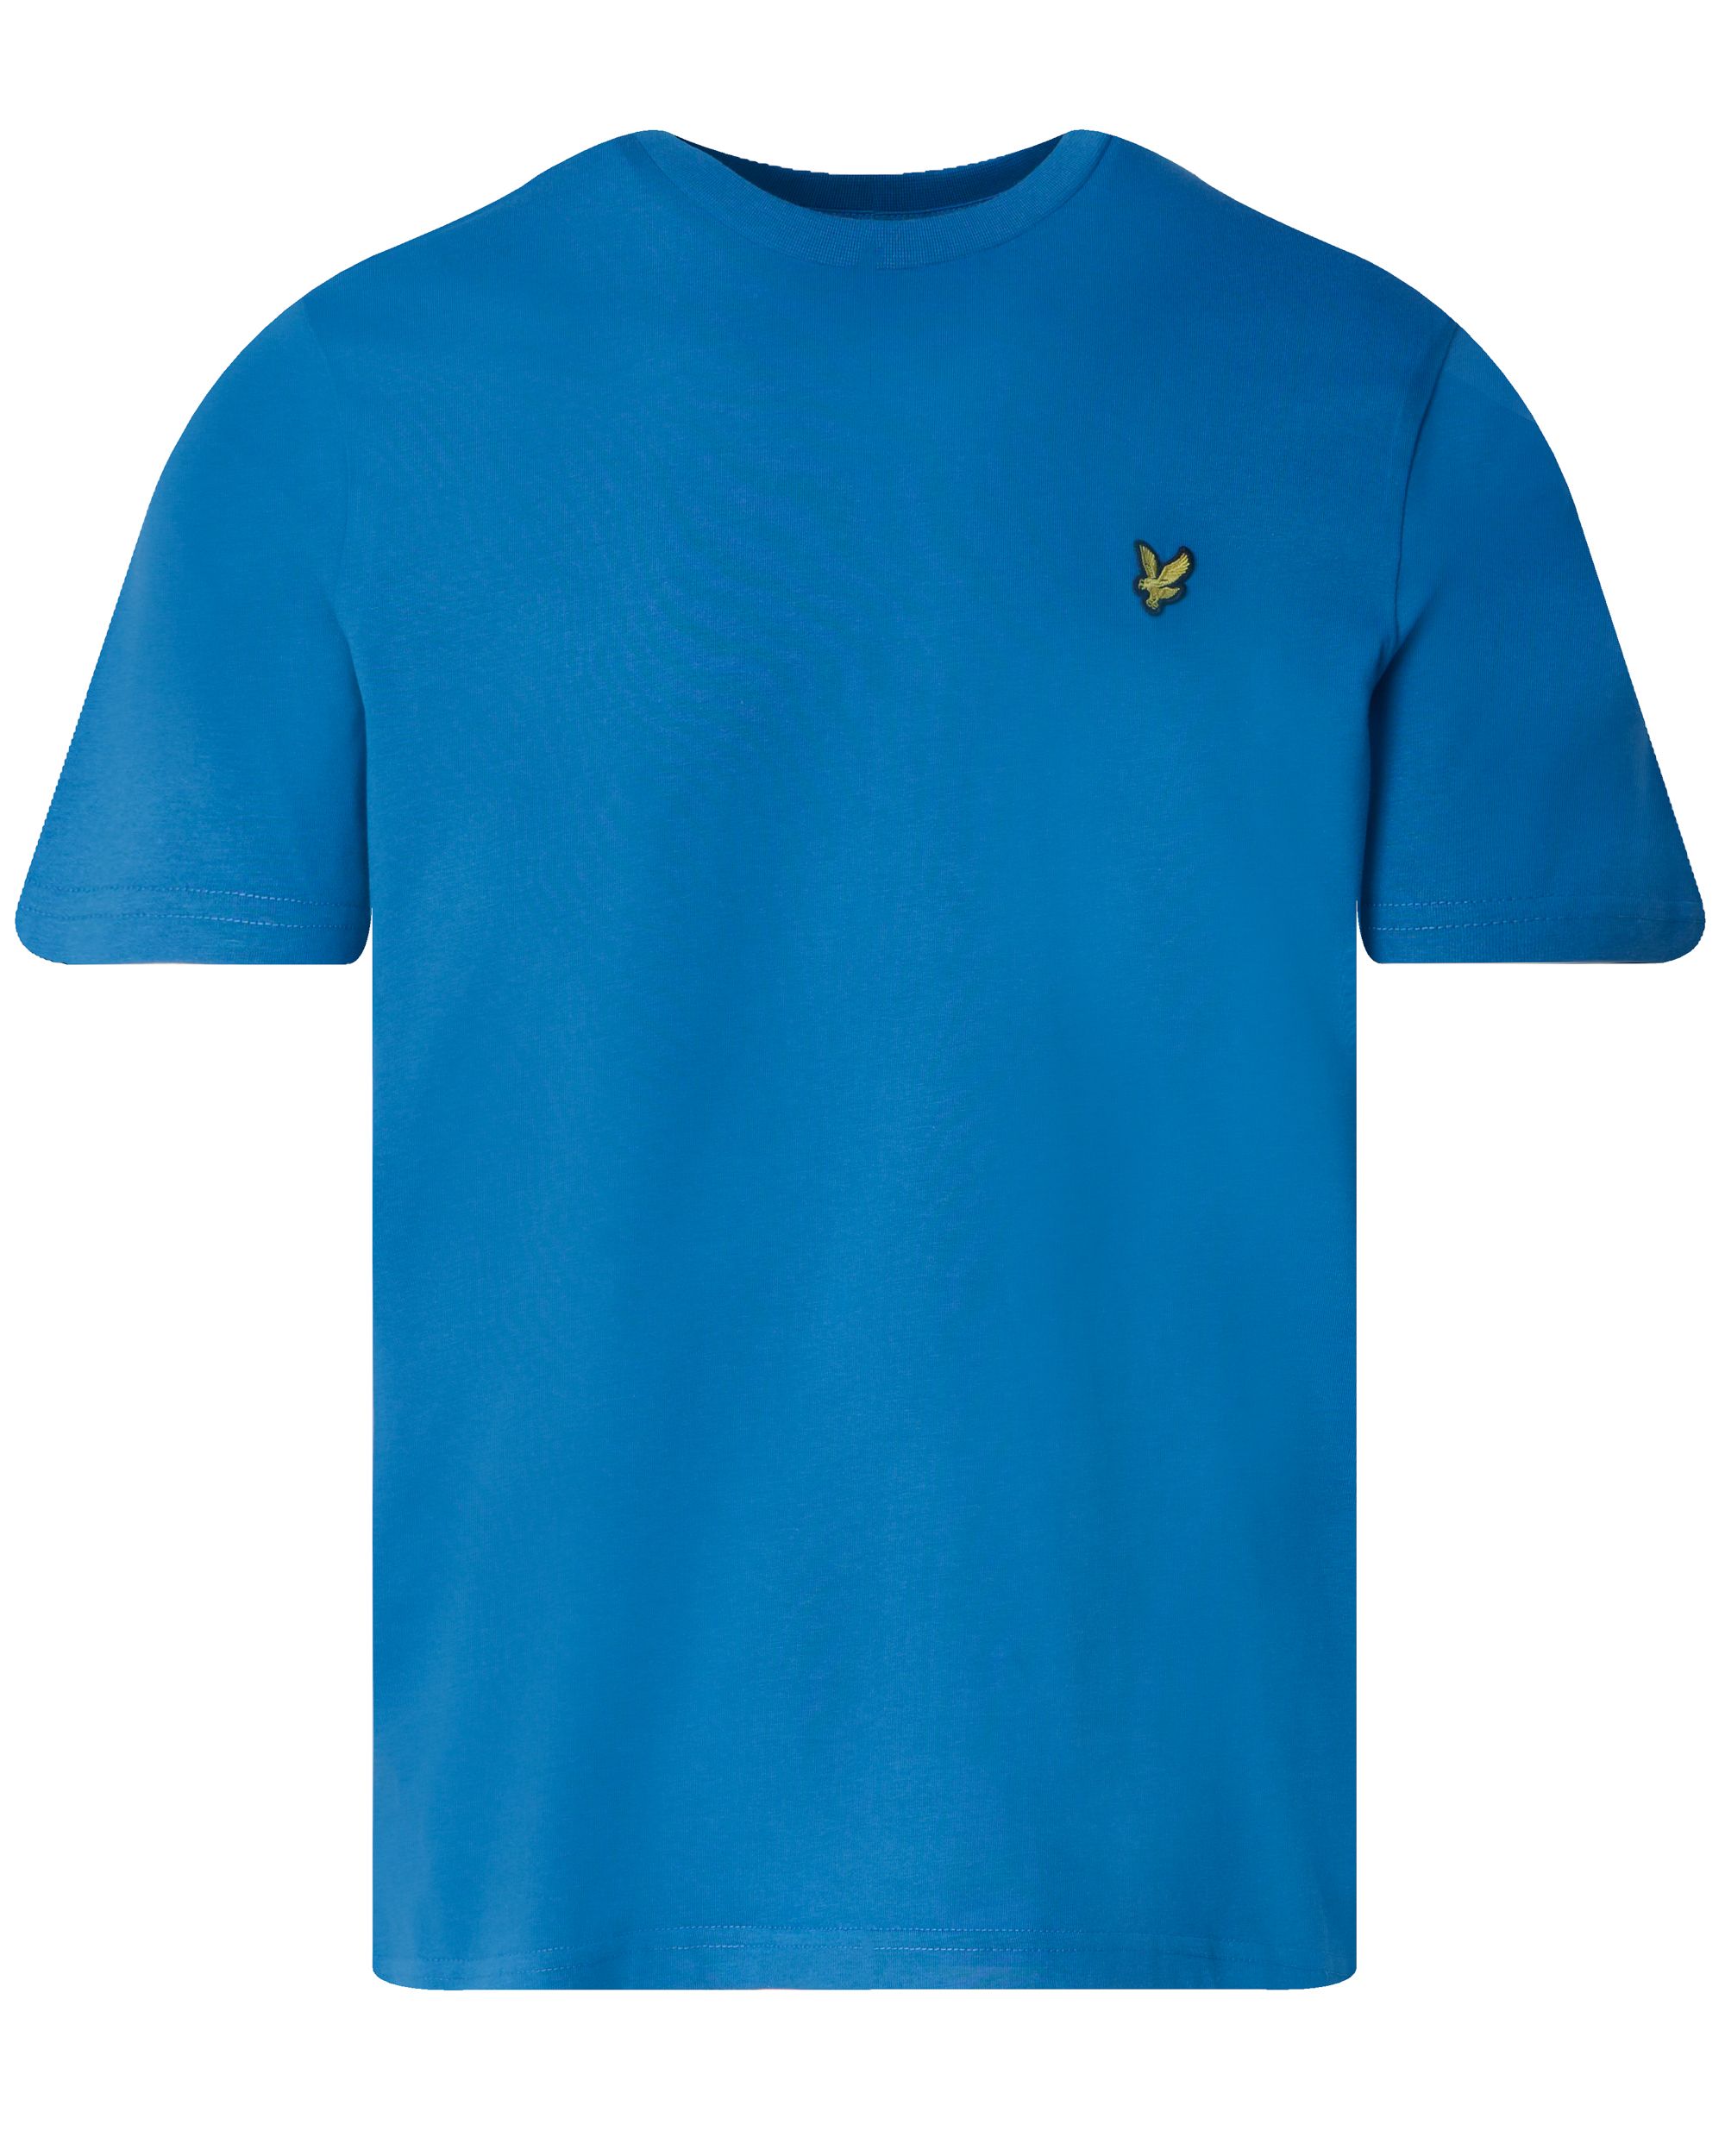 Lyle & Scott T-shirt KM Licht blauw 092272-001-L